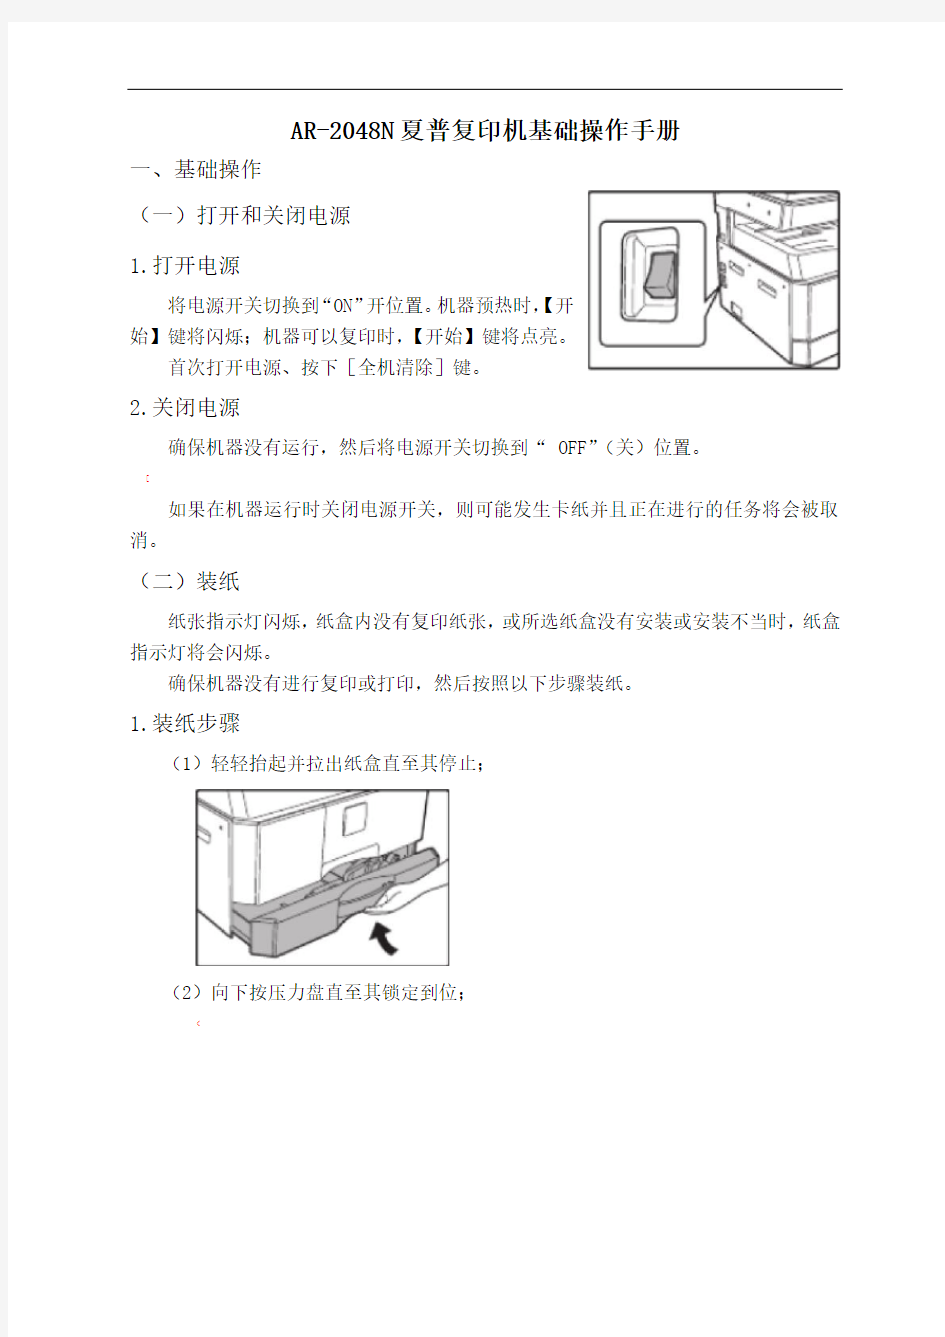 AR-2048N夏普复印机基础操作手册